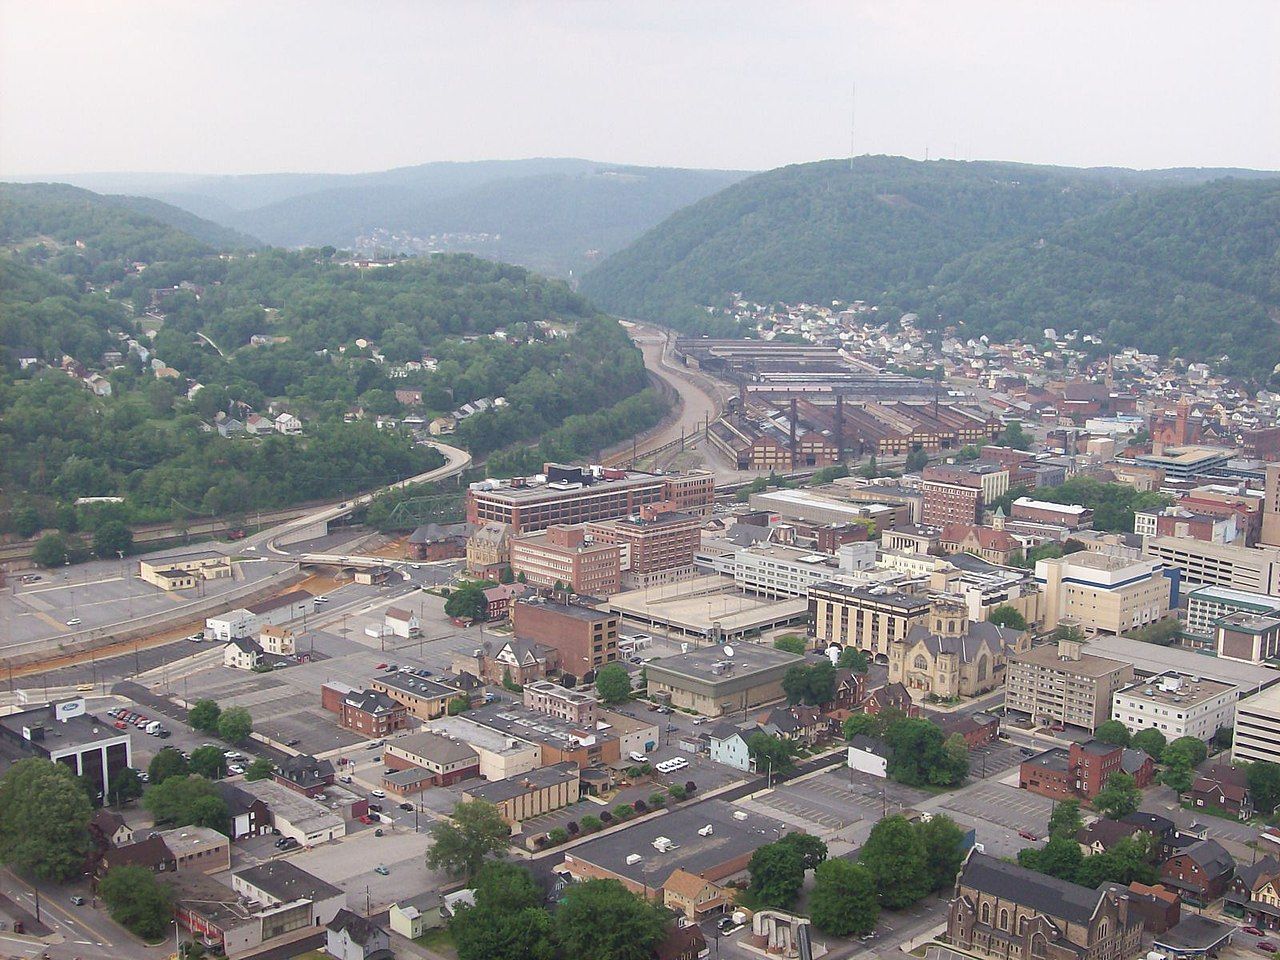 Johnstown, Pennsylvania